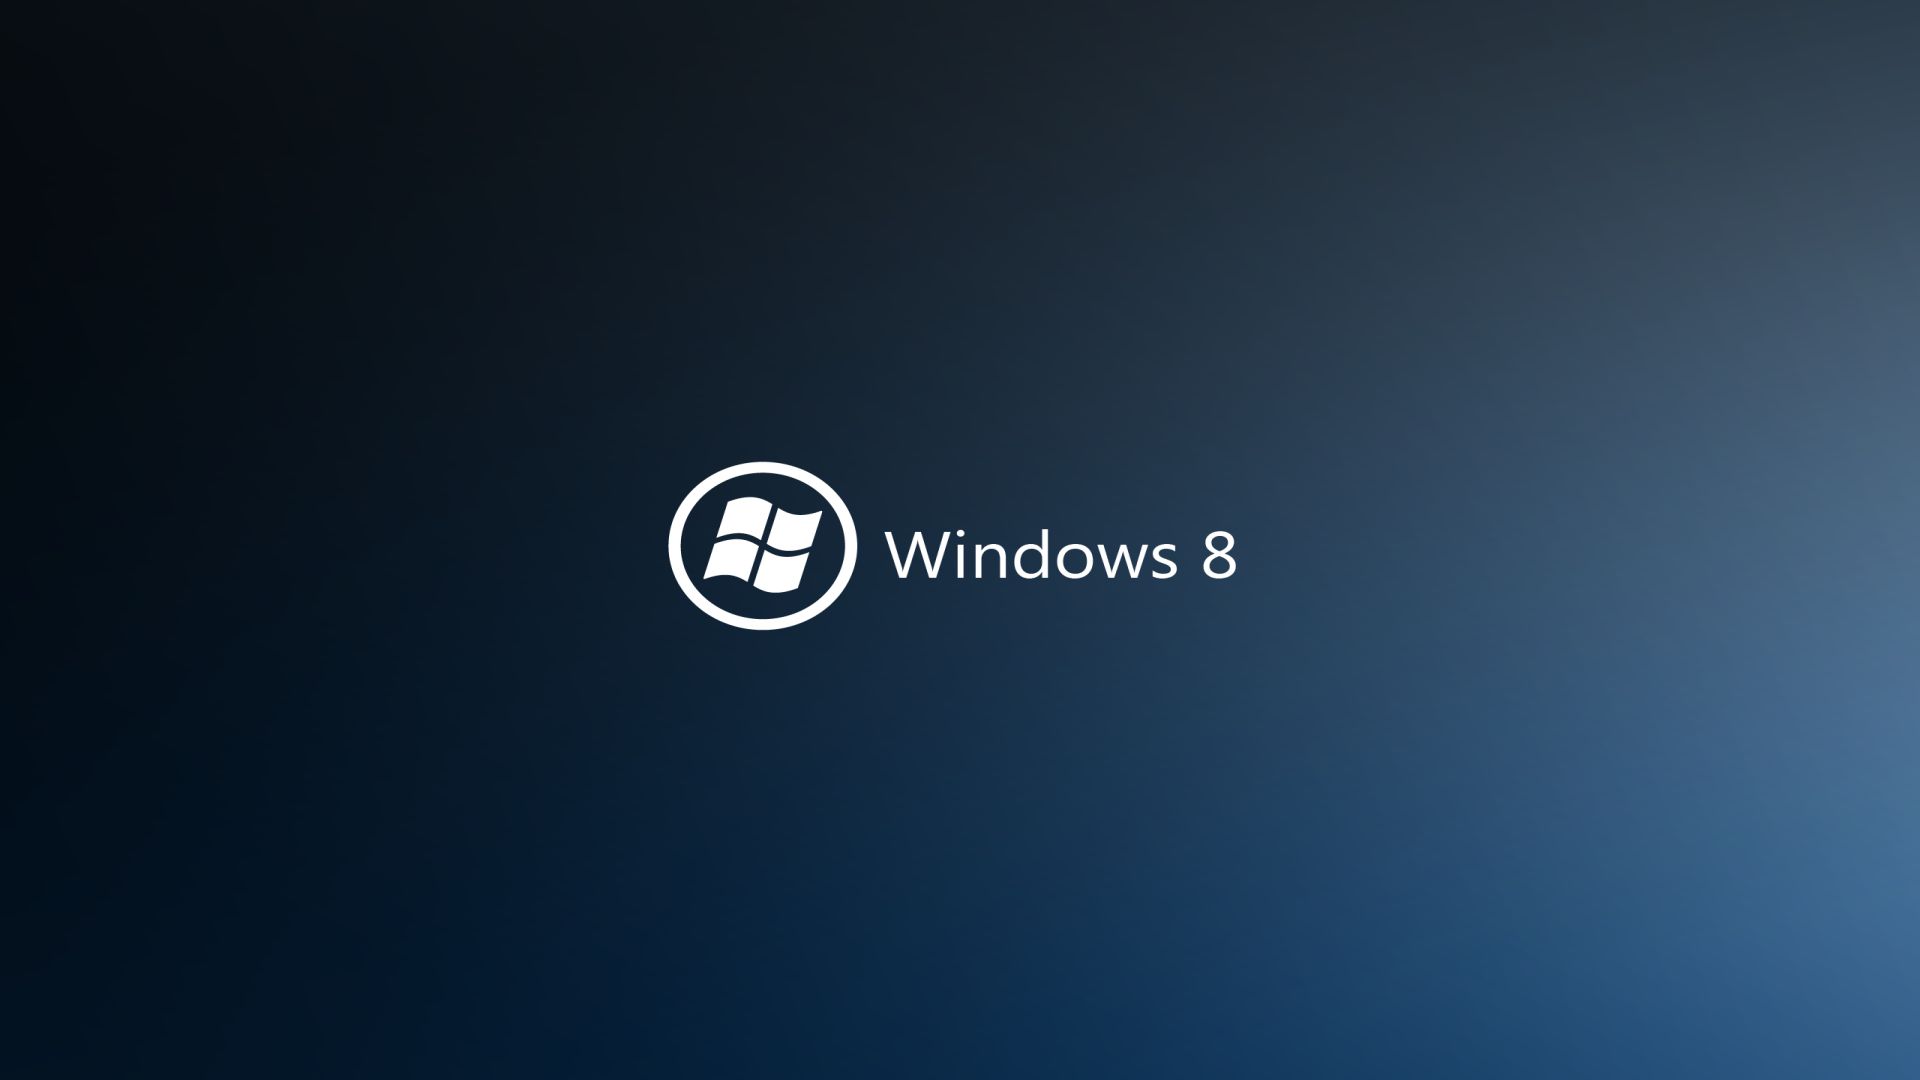 windows 8 logo hd